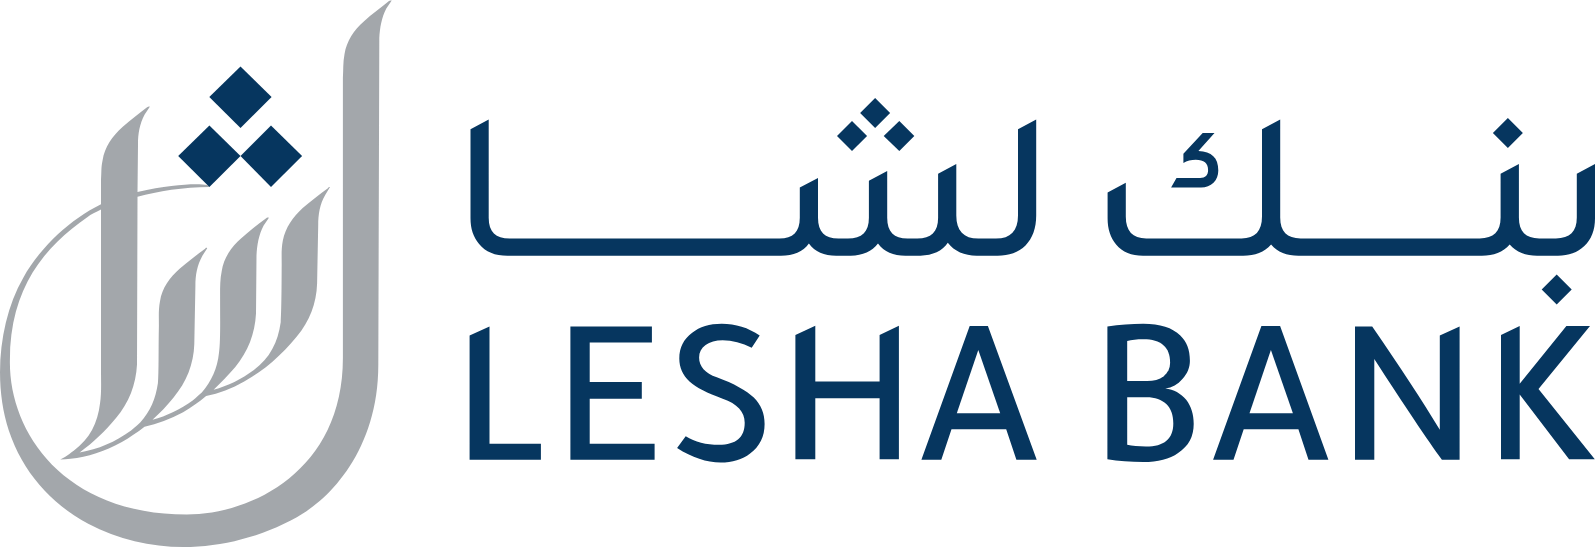 Lesha Bank logo large (transparent PNG)